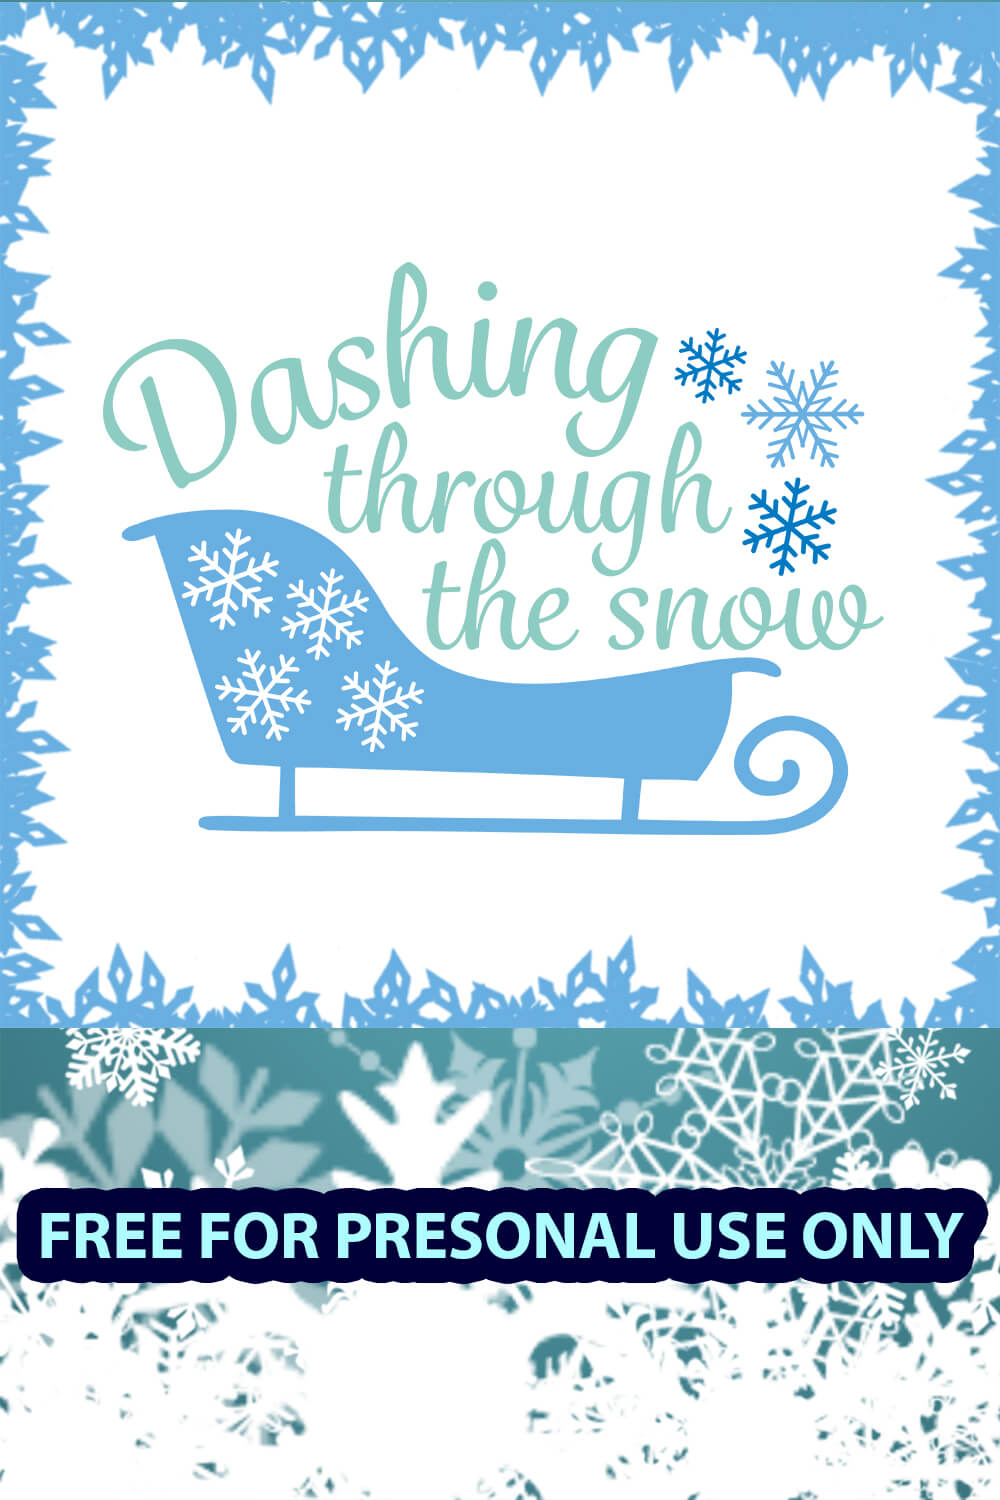 Dashing Through the Snow Free SVG files pinterest image.